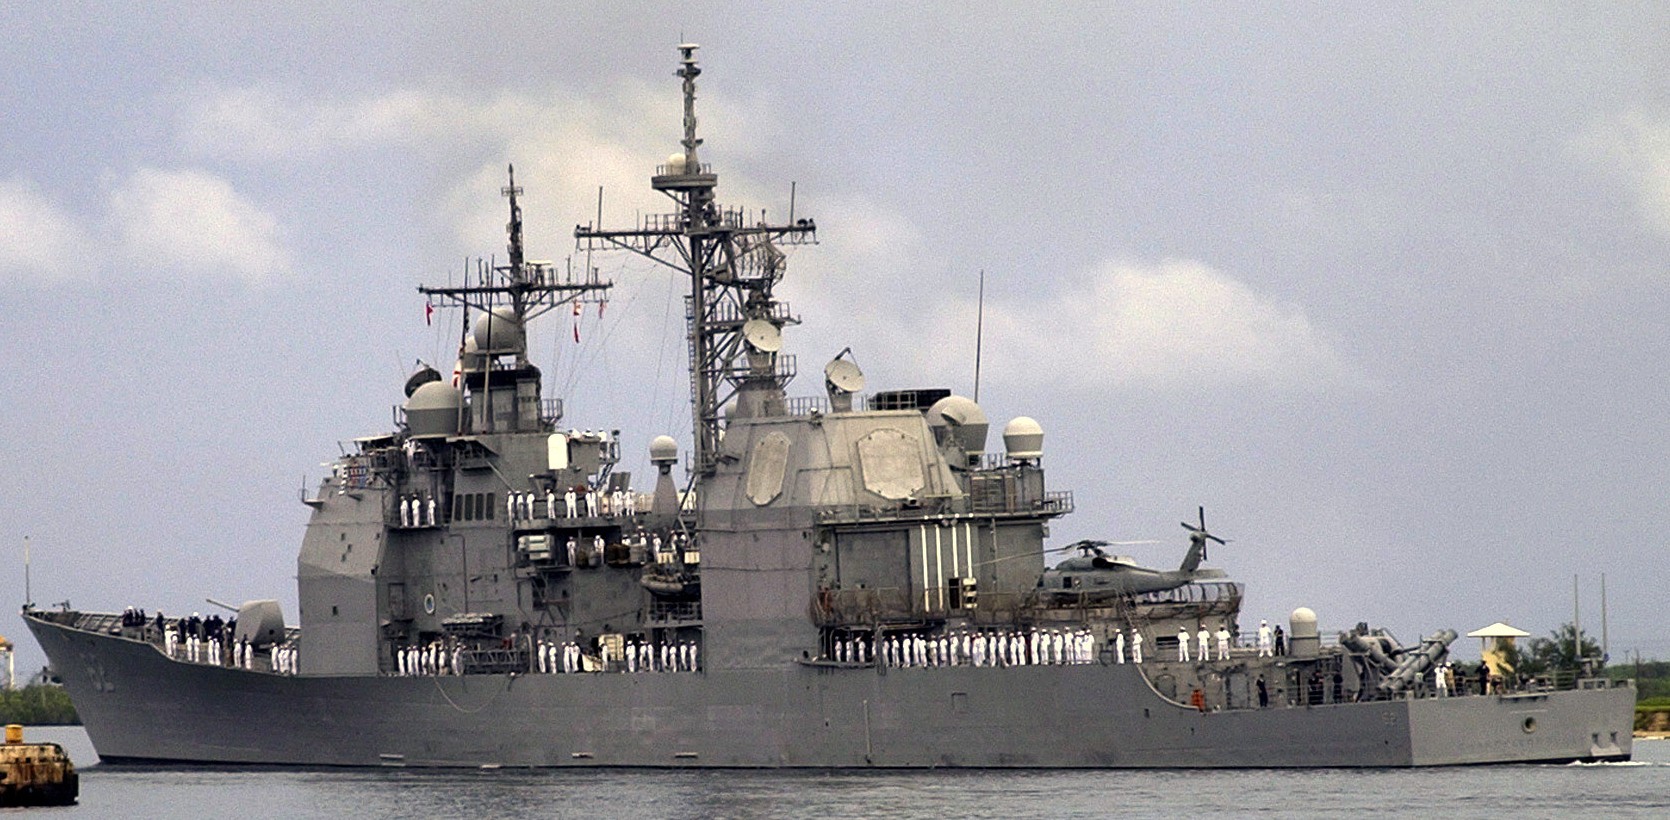 cg-62 uss chancellorsville ticonderoga class guided missile cruiser aegis us navy apra harbor guam 04